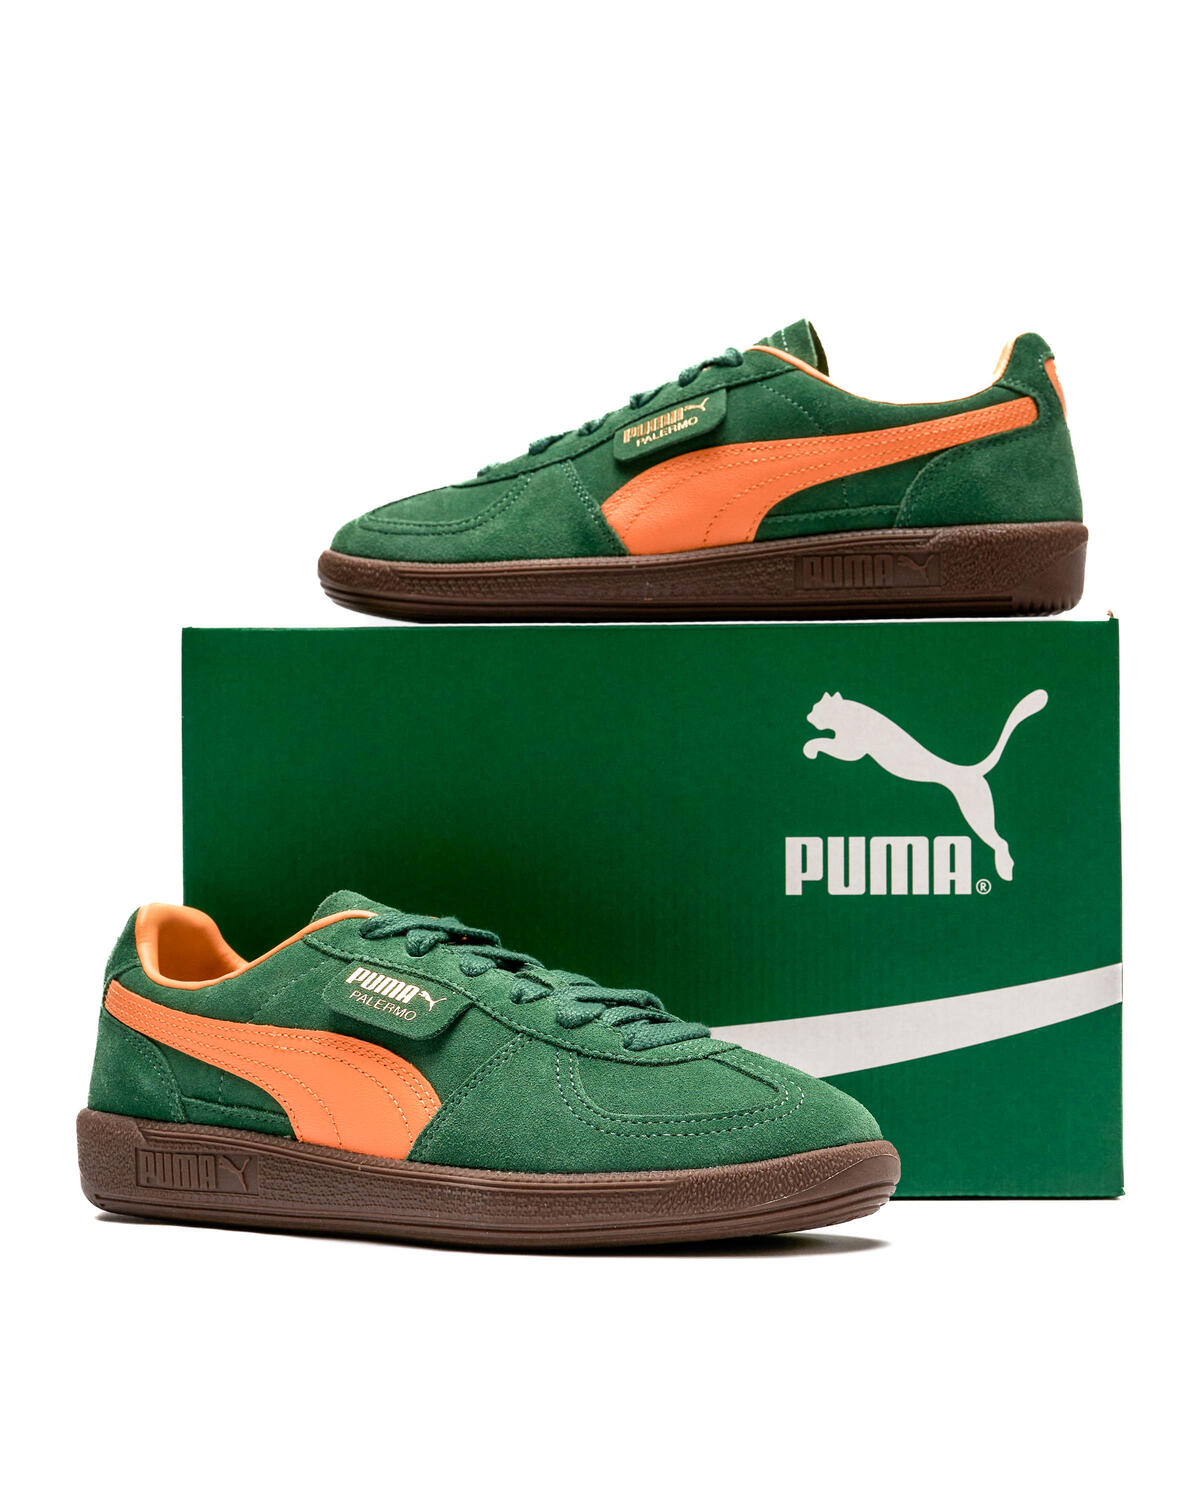 Puma Palermo, 396463-05